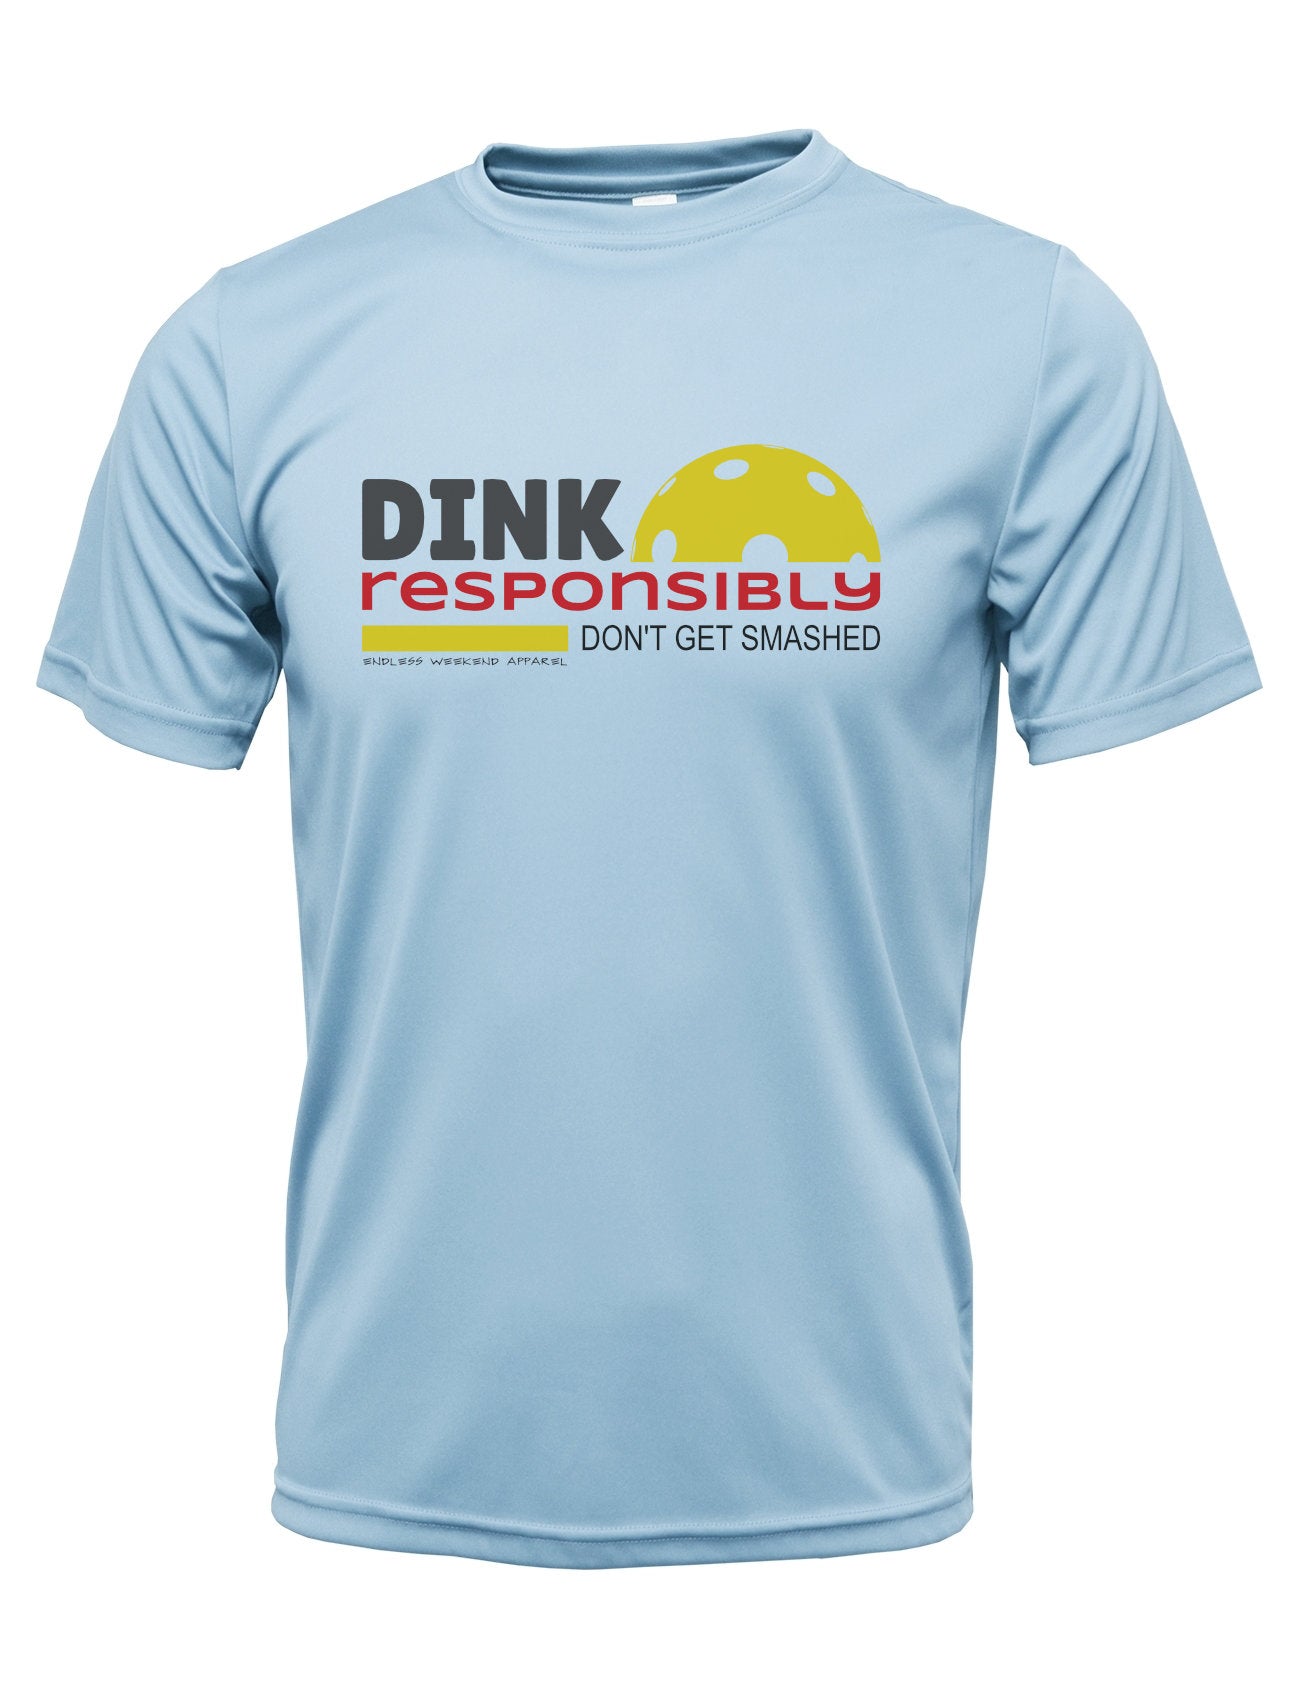 DINK RESPONSIBLY PERFORMANCE PICKLEBALL SHIRT